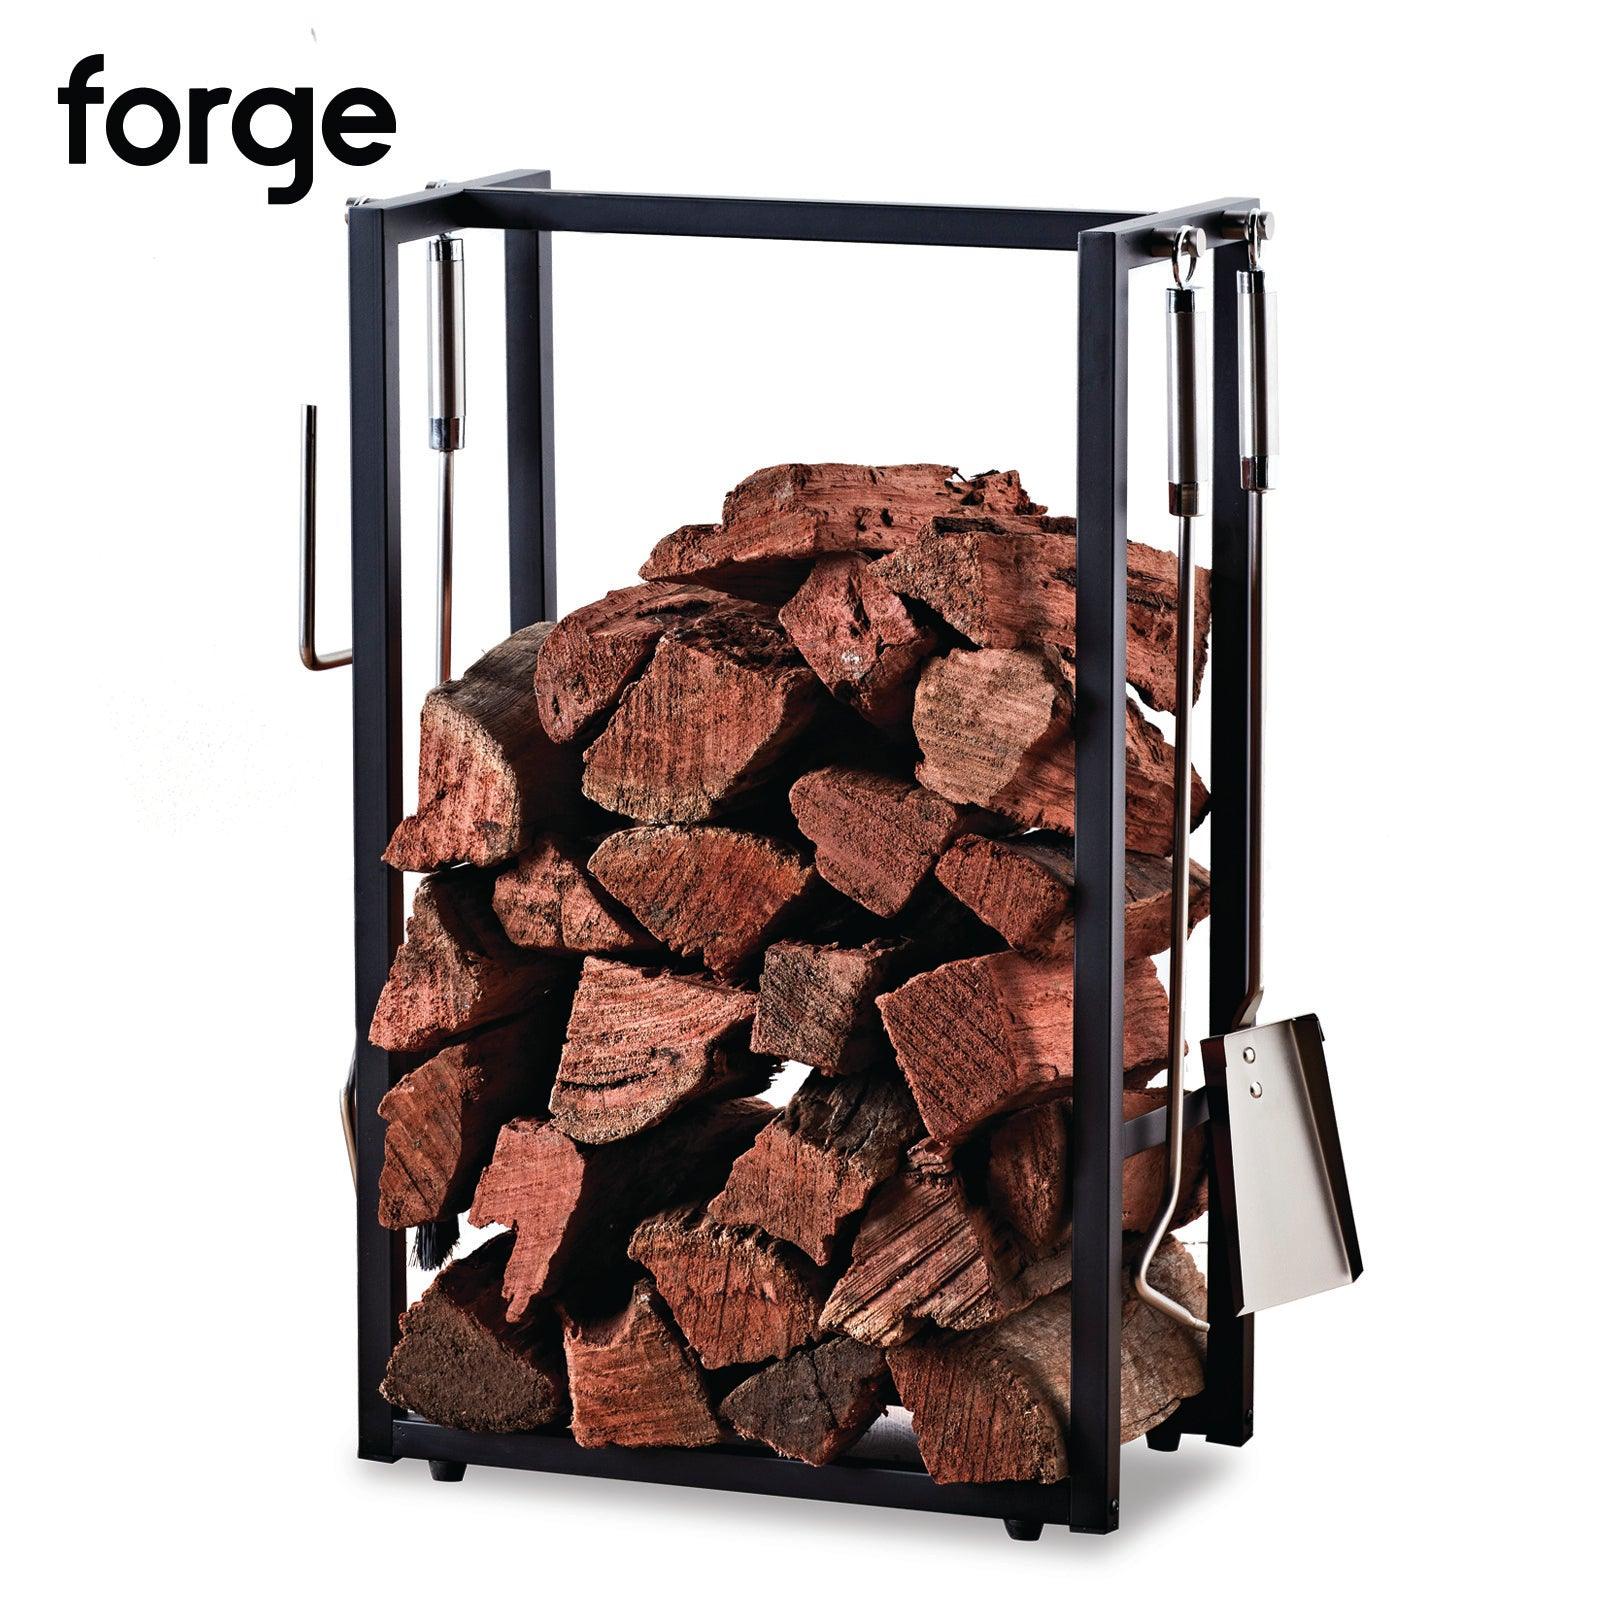 Forge Wood Storage - Hinterland - Horizon Leisure